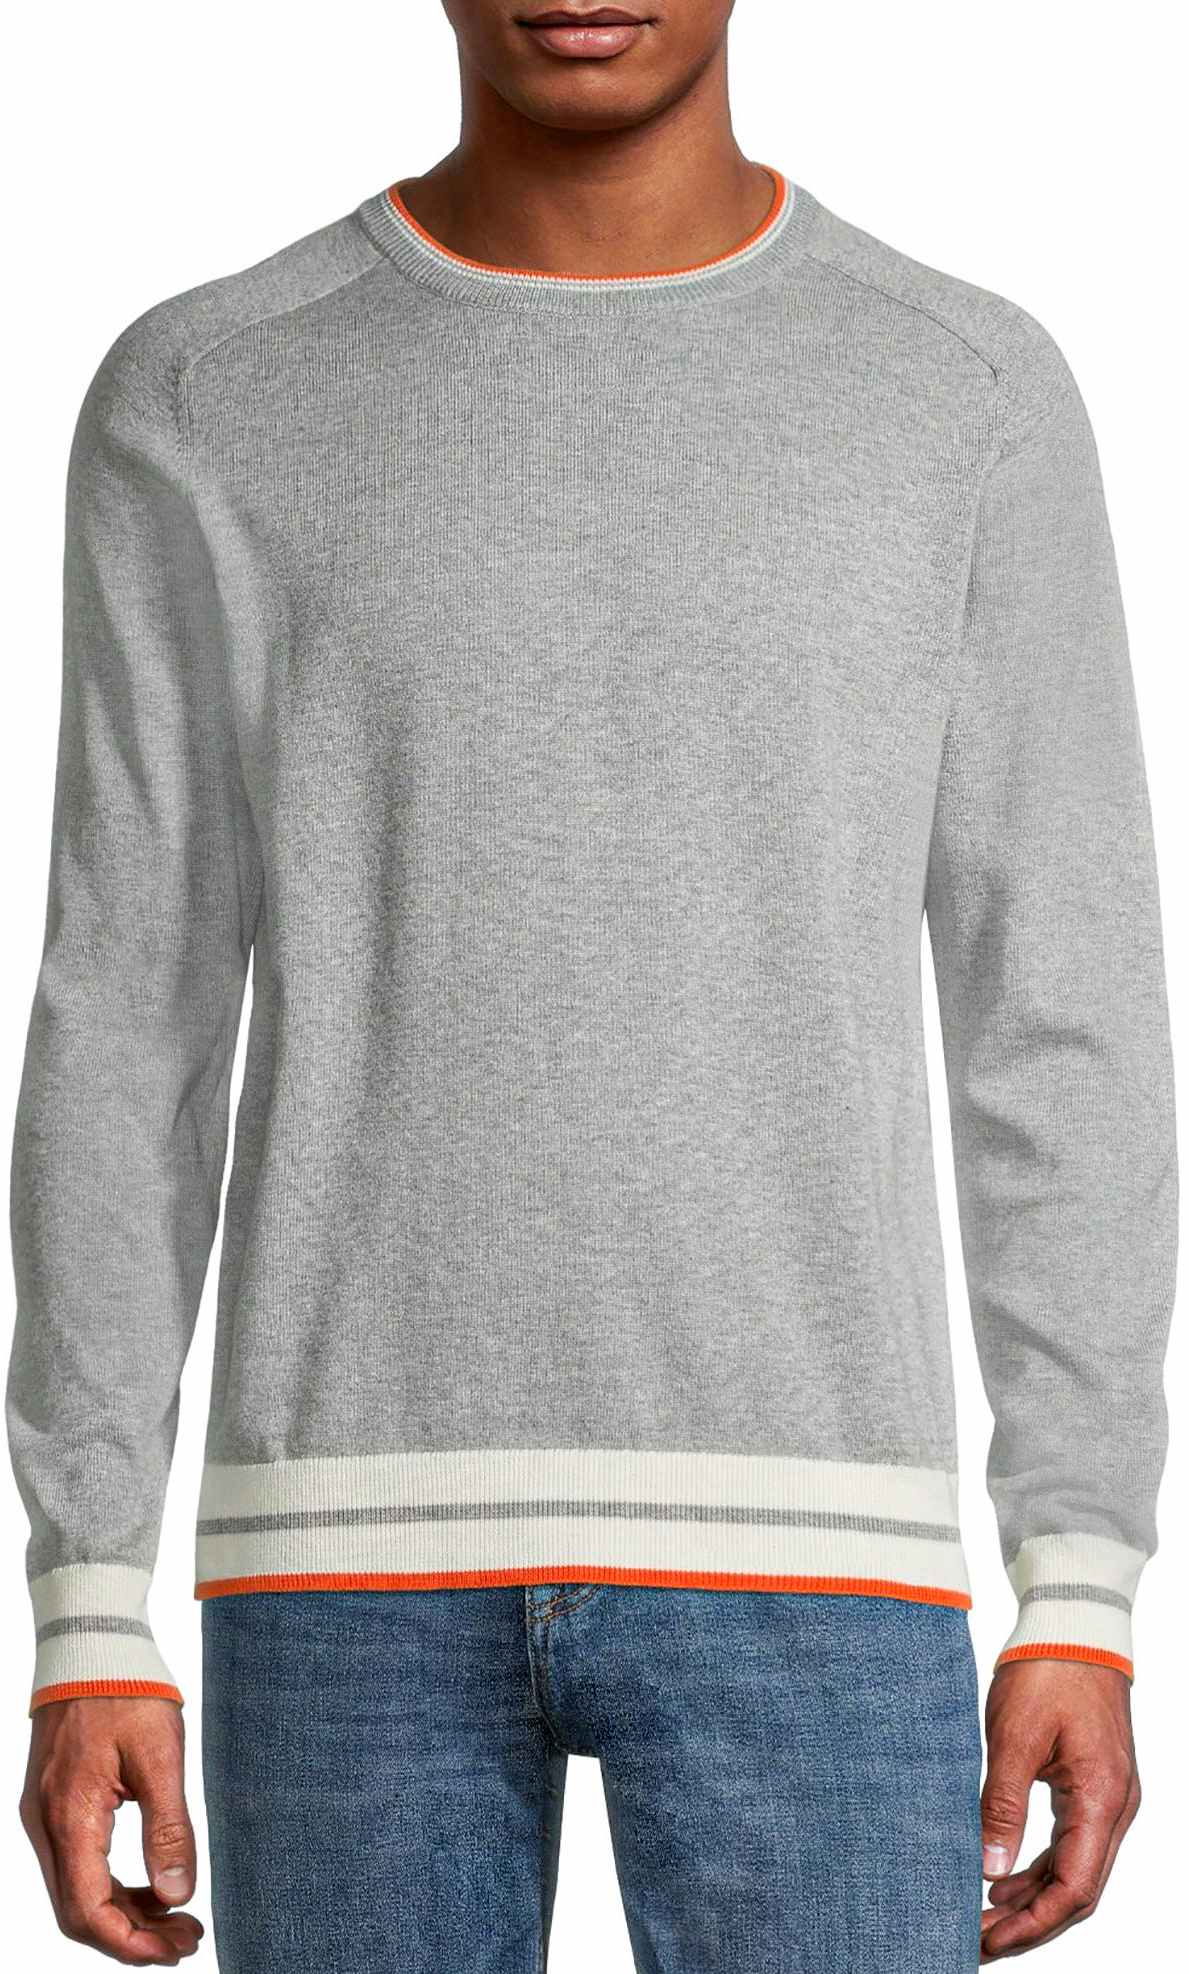 walmart-tribekka-44-pullover-striped-sweater-2022